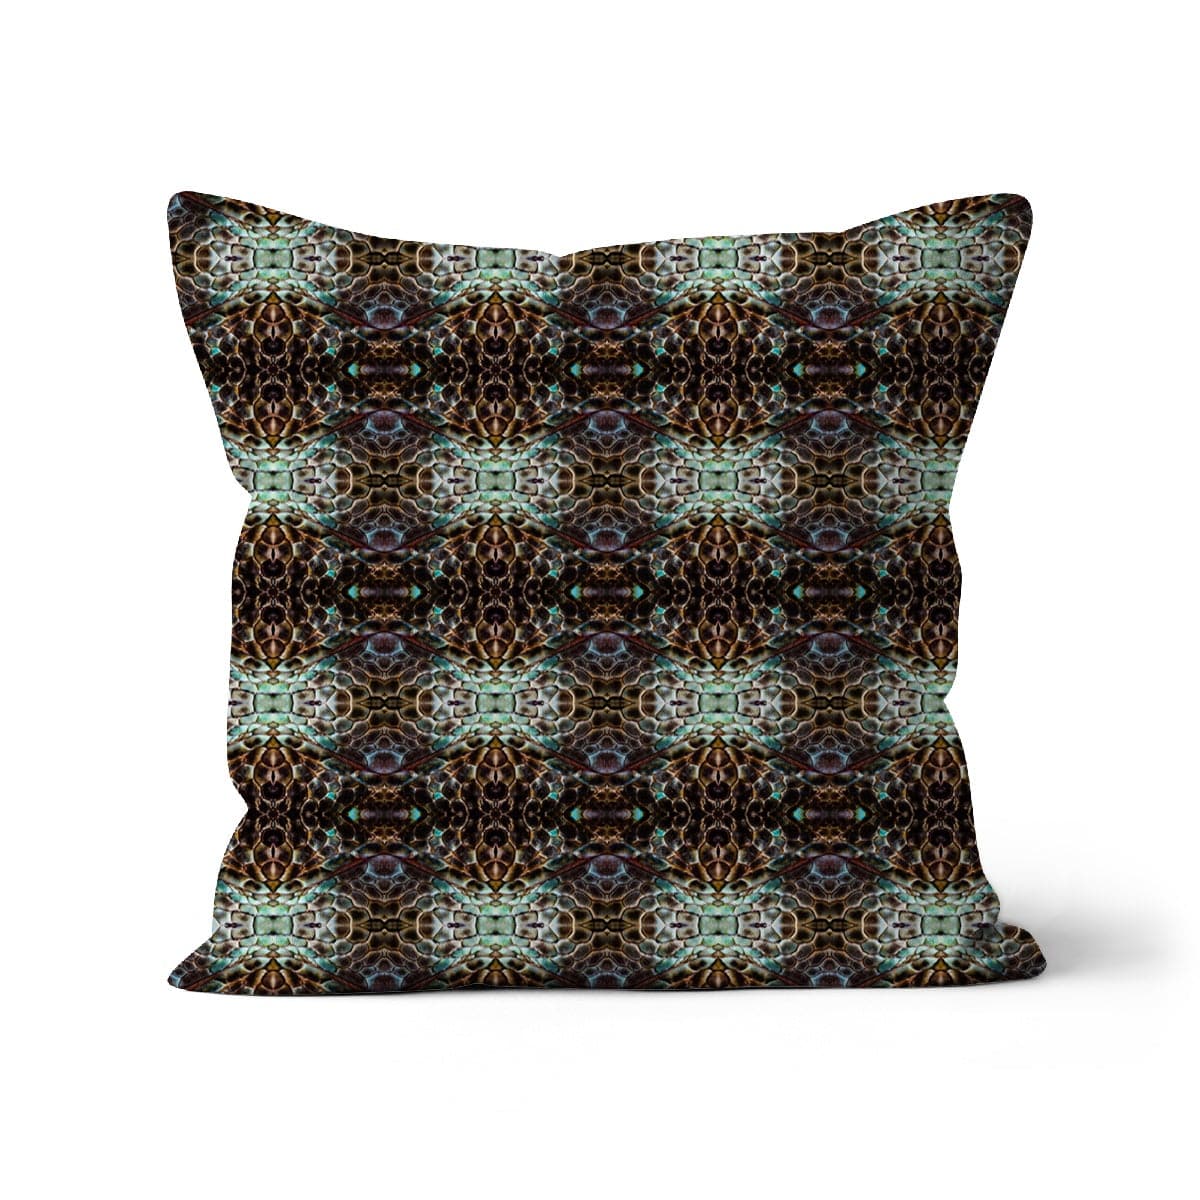 Reptile skin design  Meditation Pillow/Cushion, by Sensus Studio Design